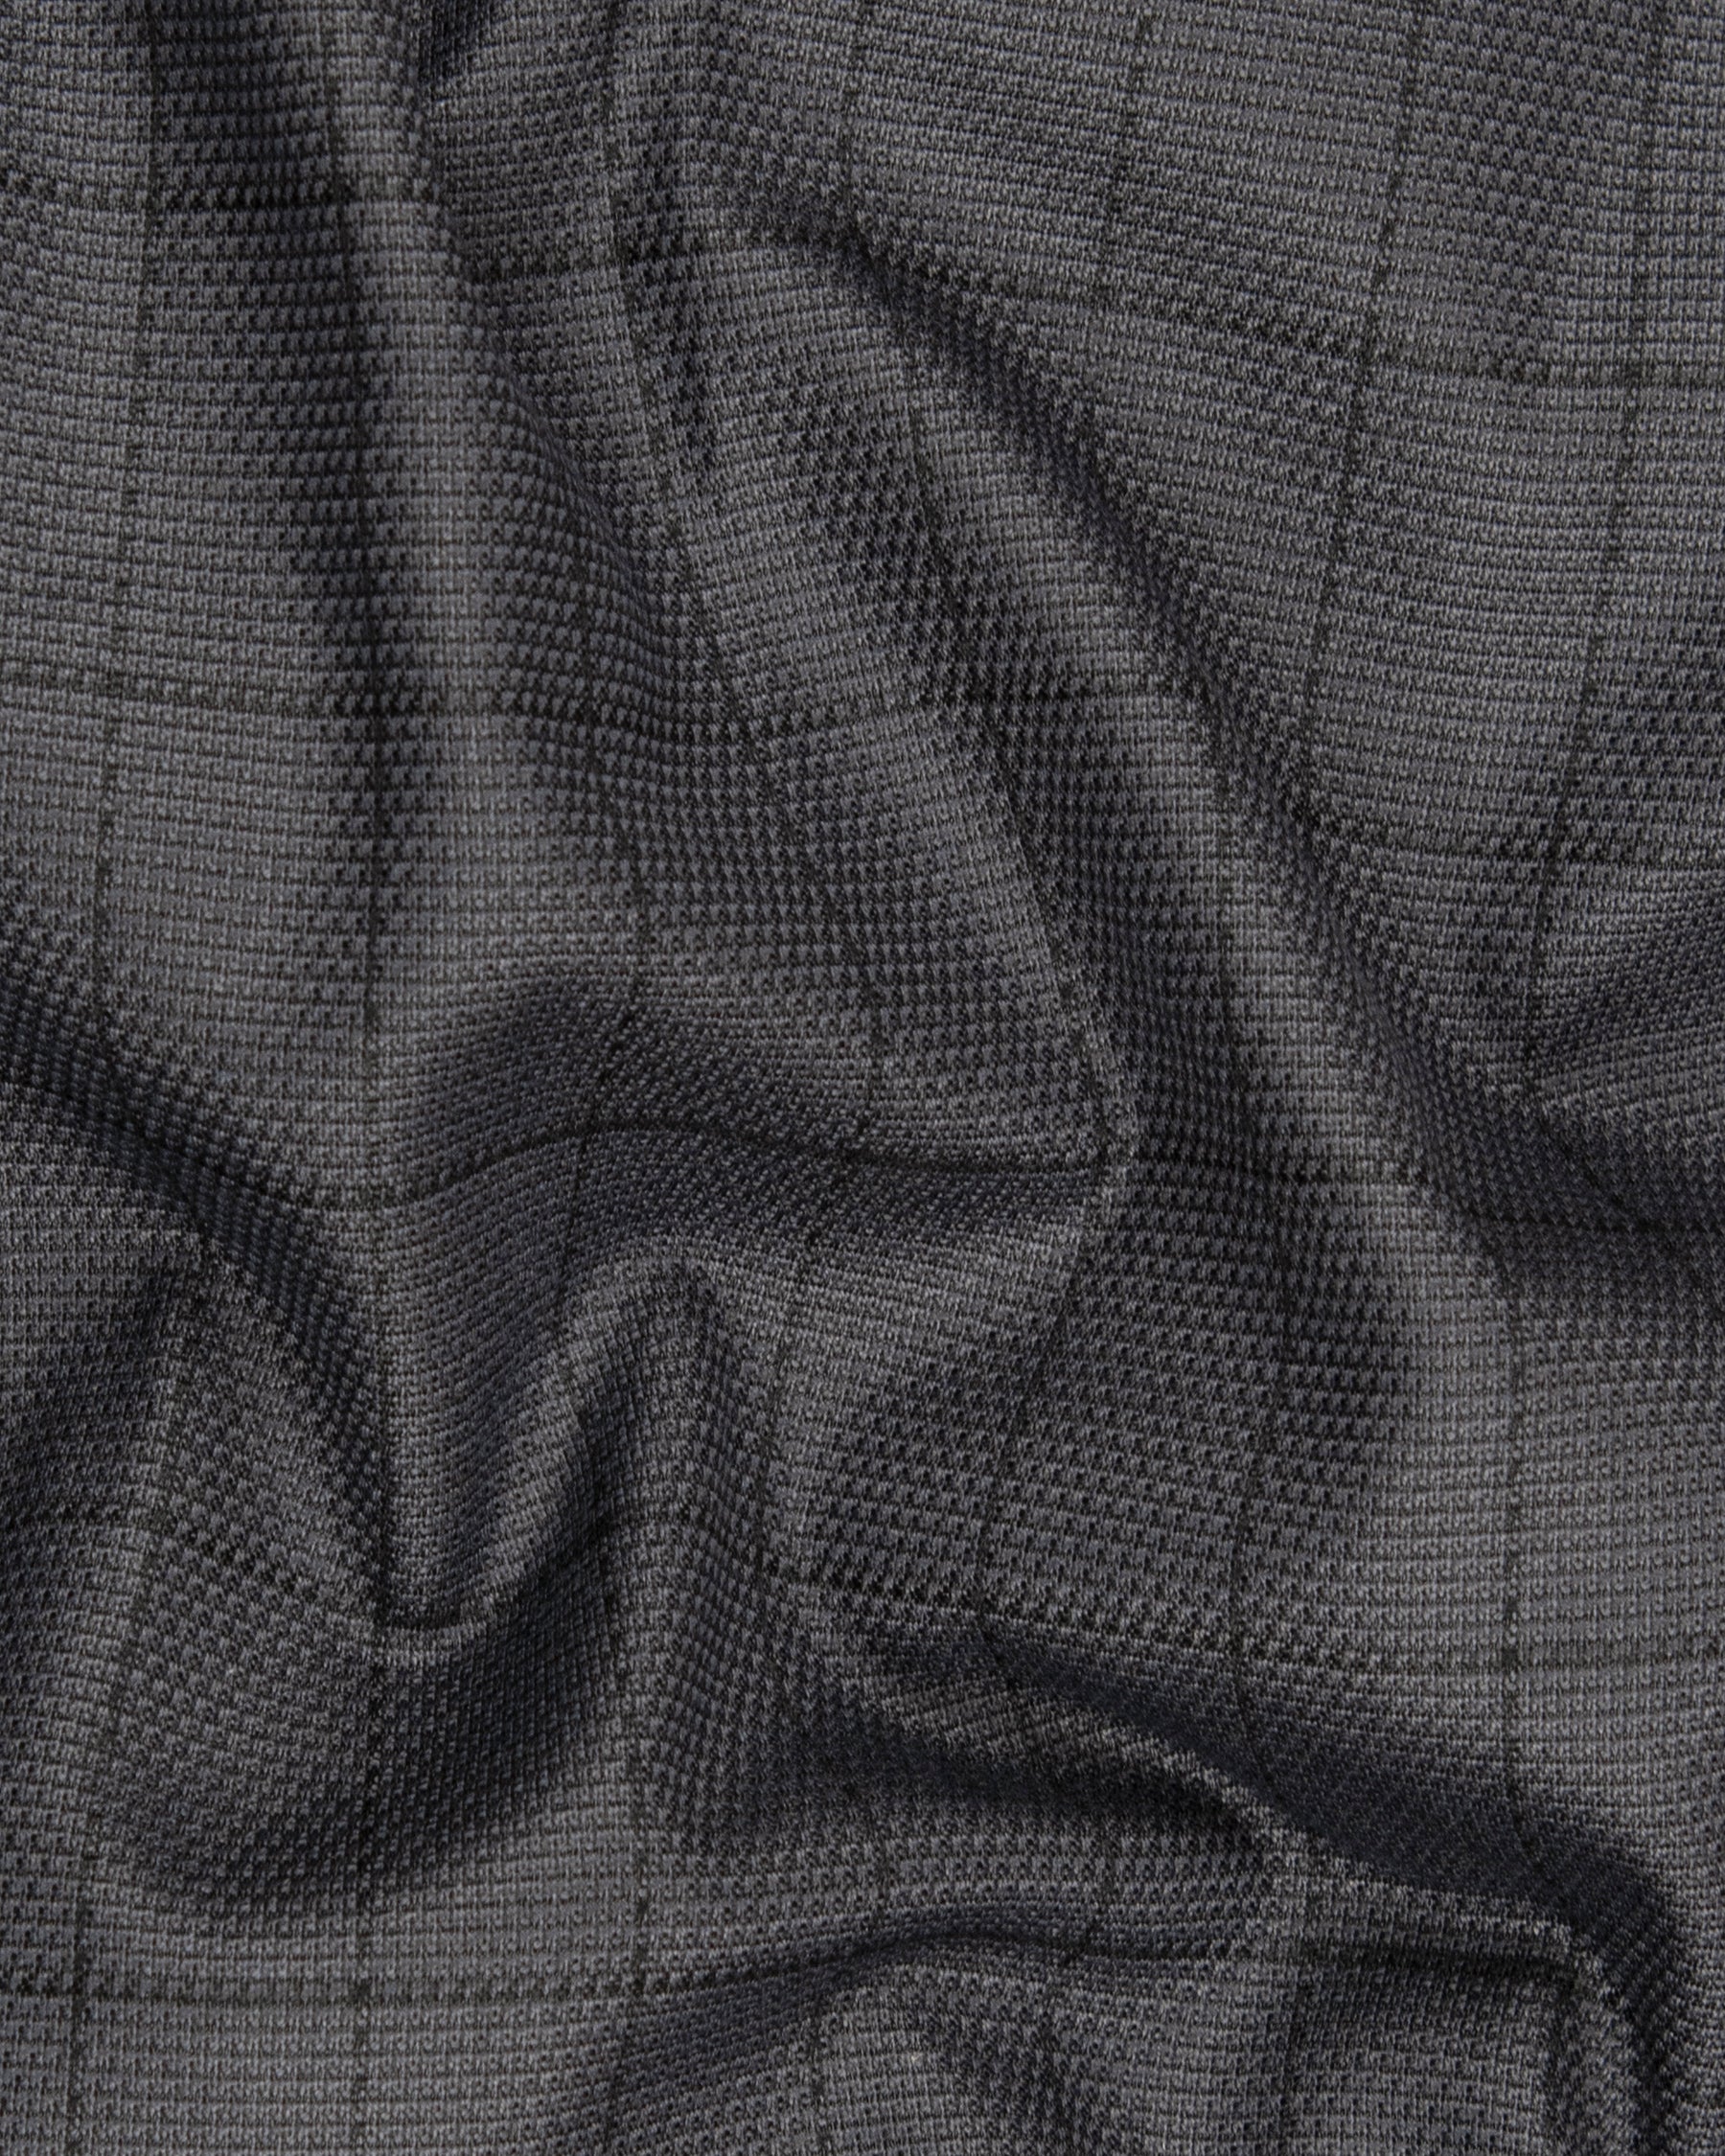 Fuscous Gray Windowpane Wool Rich Waistcoat V1282-36, V1282-38, V1282-40, V1282-42, V1282-44, V1282-46, V1282-48, V1282-50, V1282-52, V1282-54, V1282-56, V1282-58, V1282-60